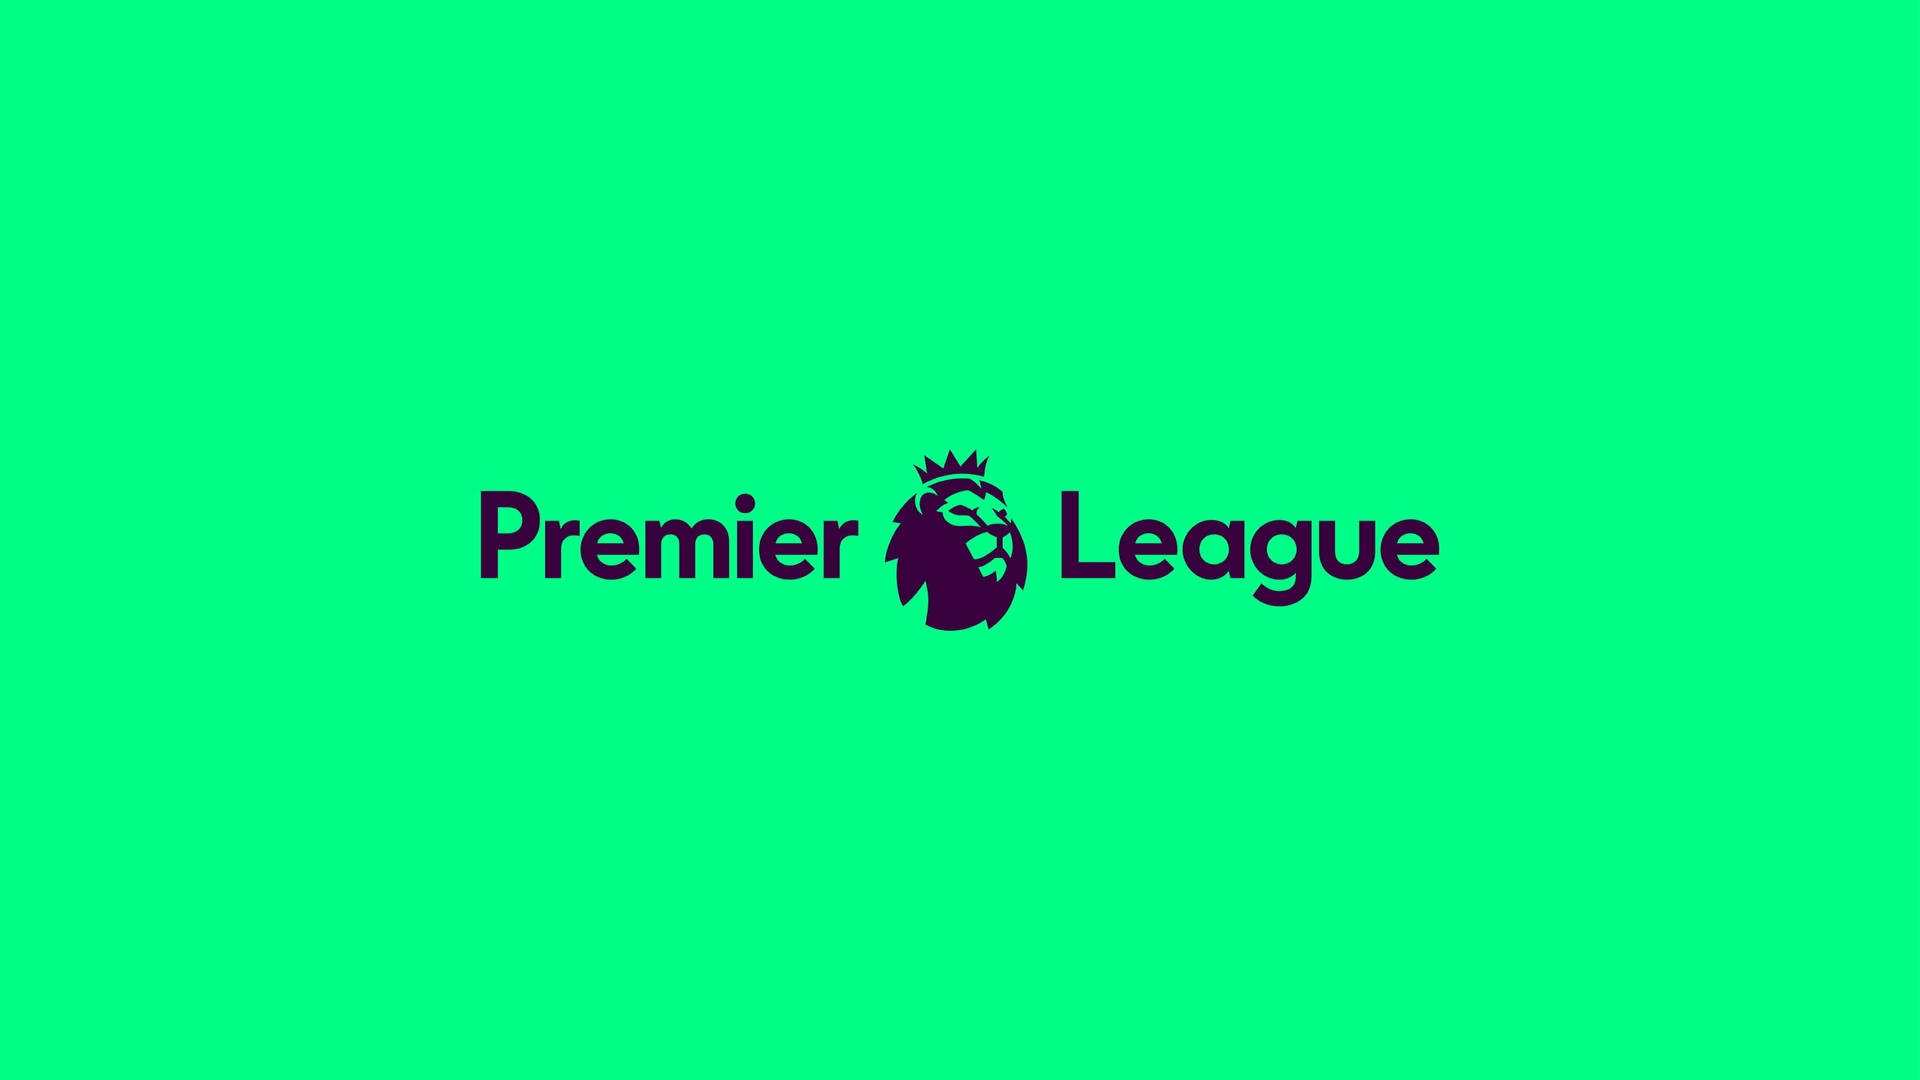 Premier League In Green Background